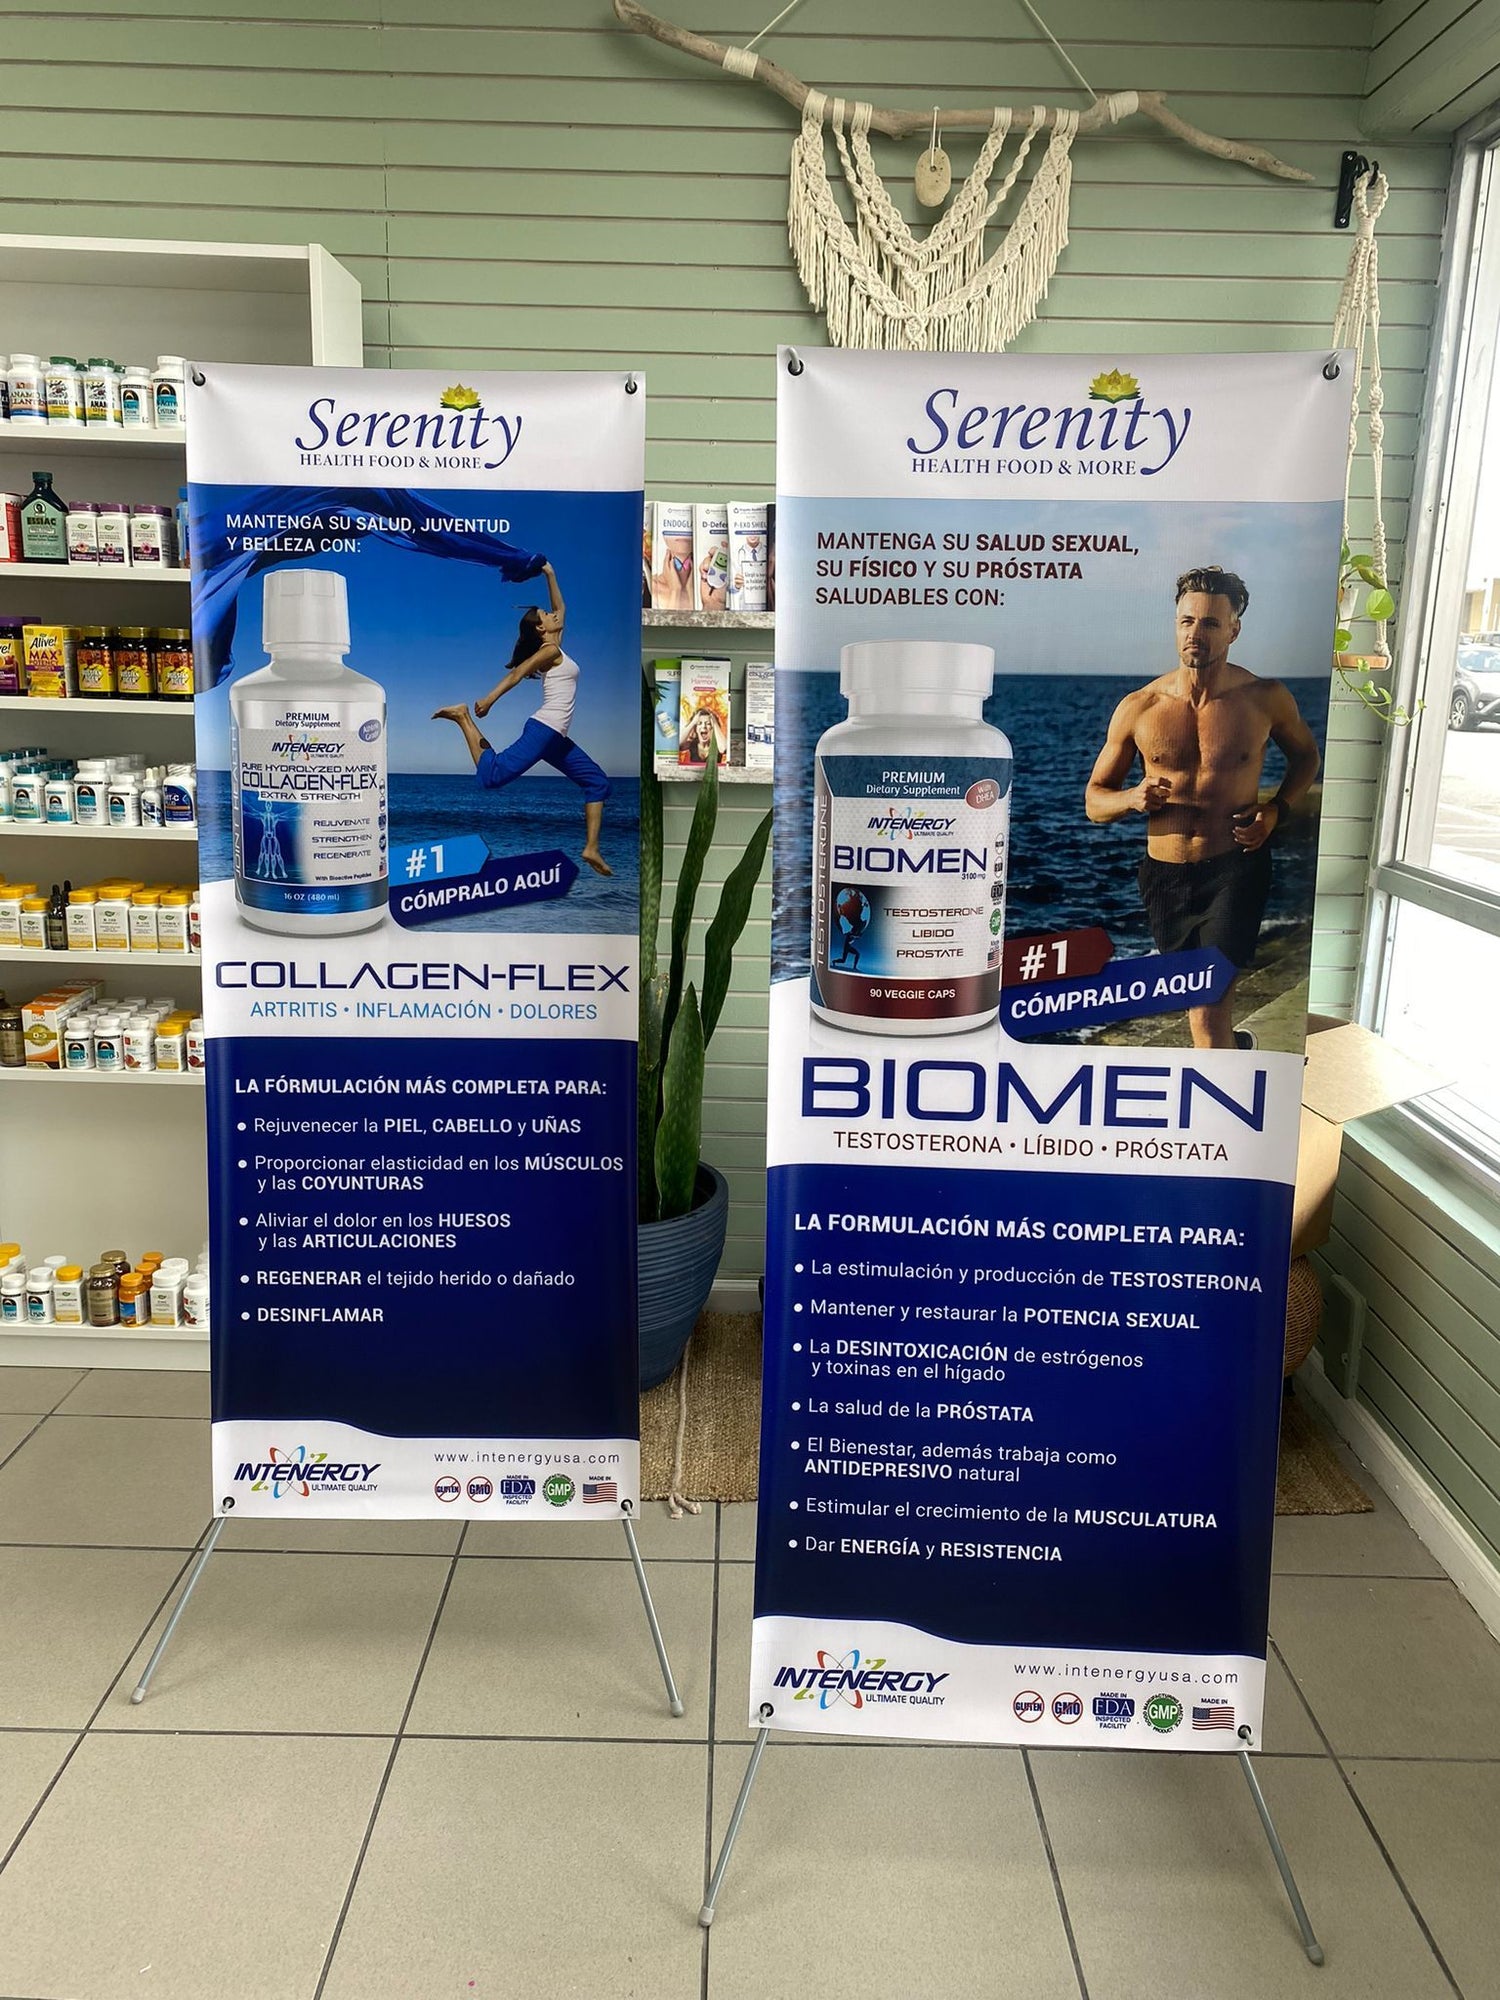 Intenergy Biomen Dislays in Punto Natural Vitamin Supplement Shop in Puerto Rico.